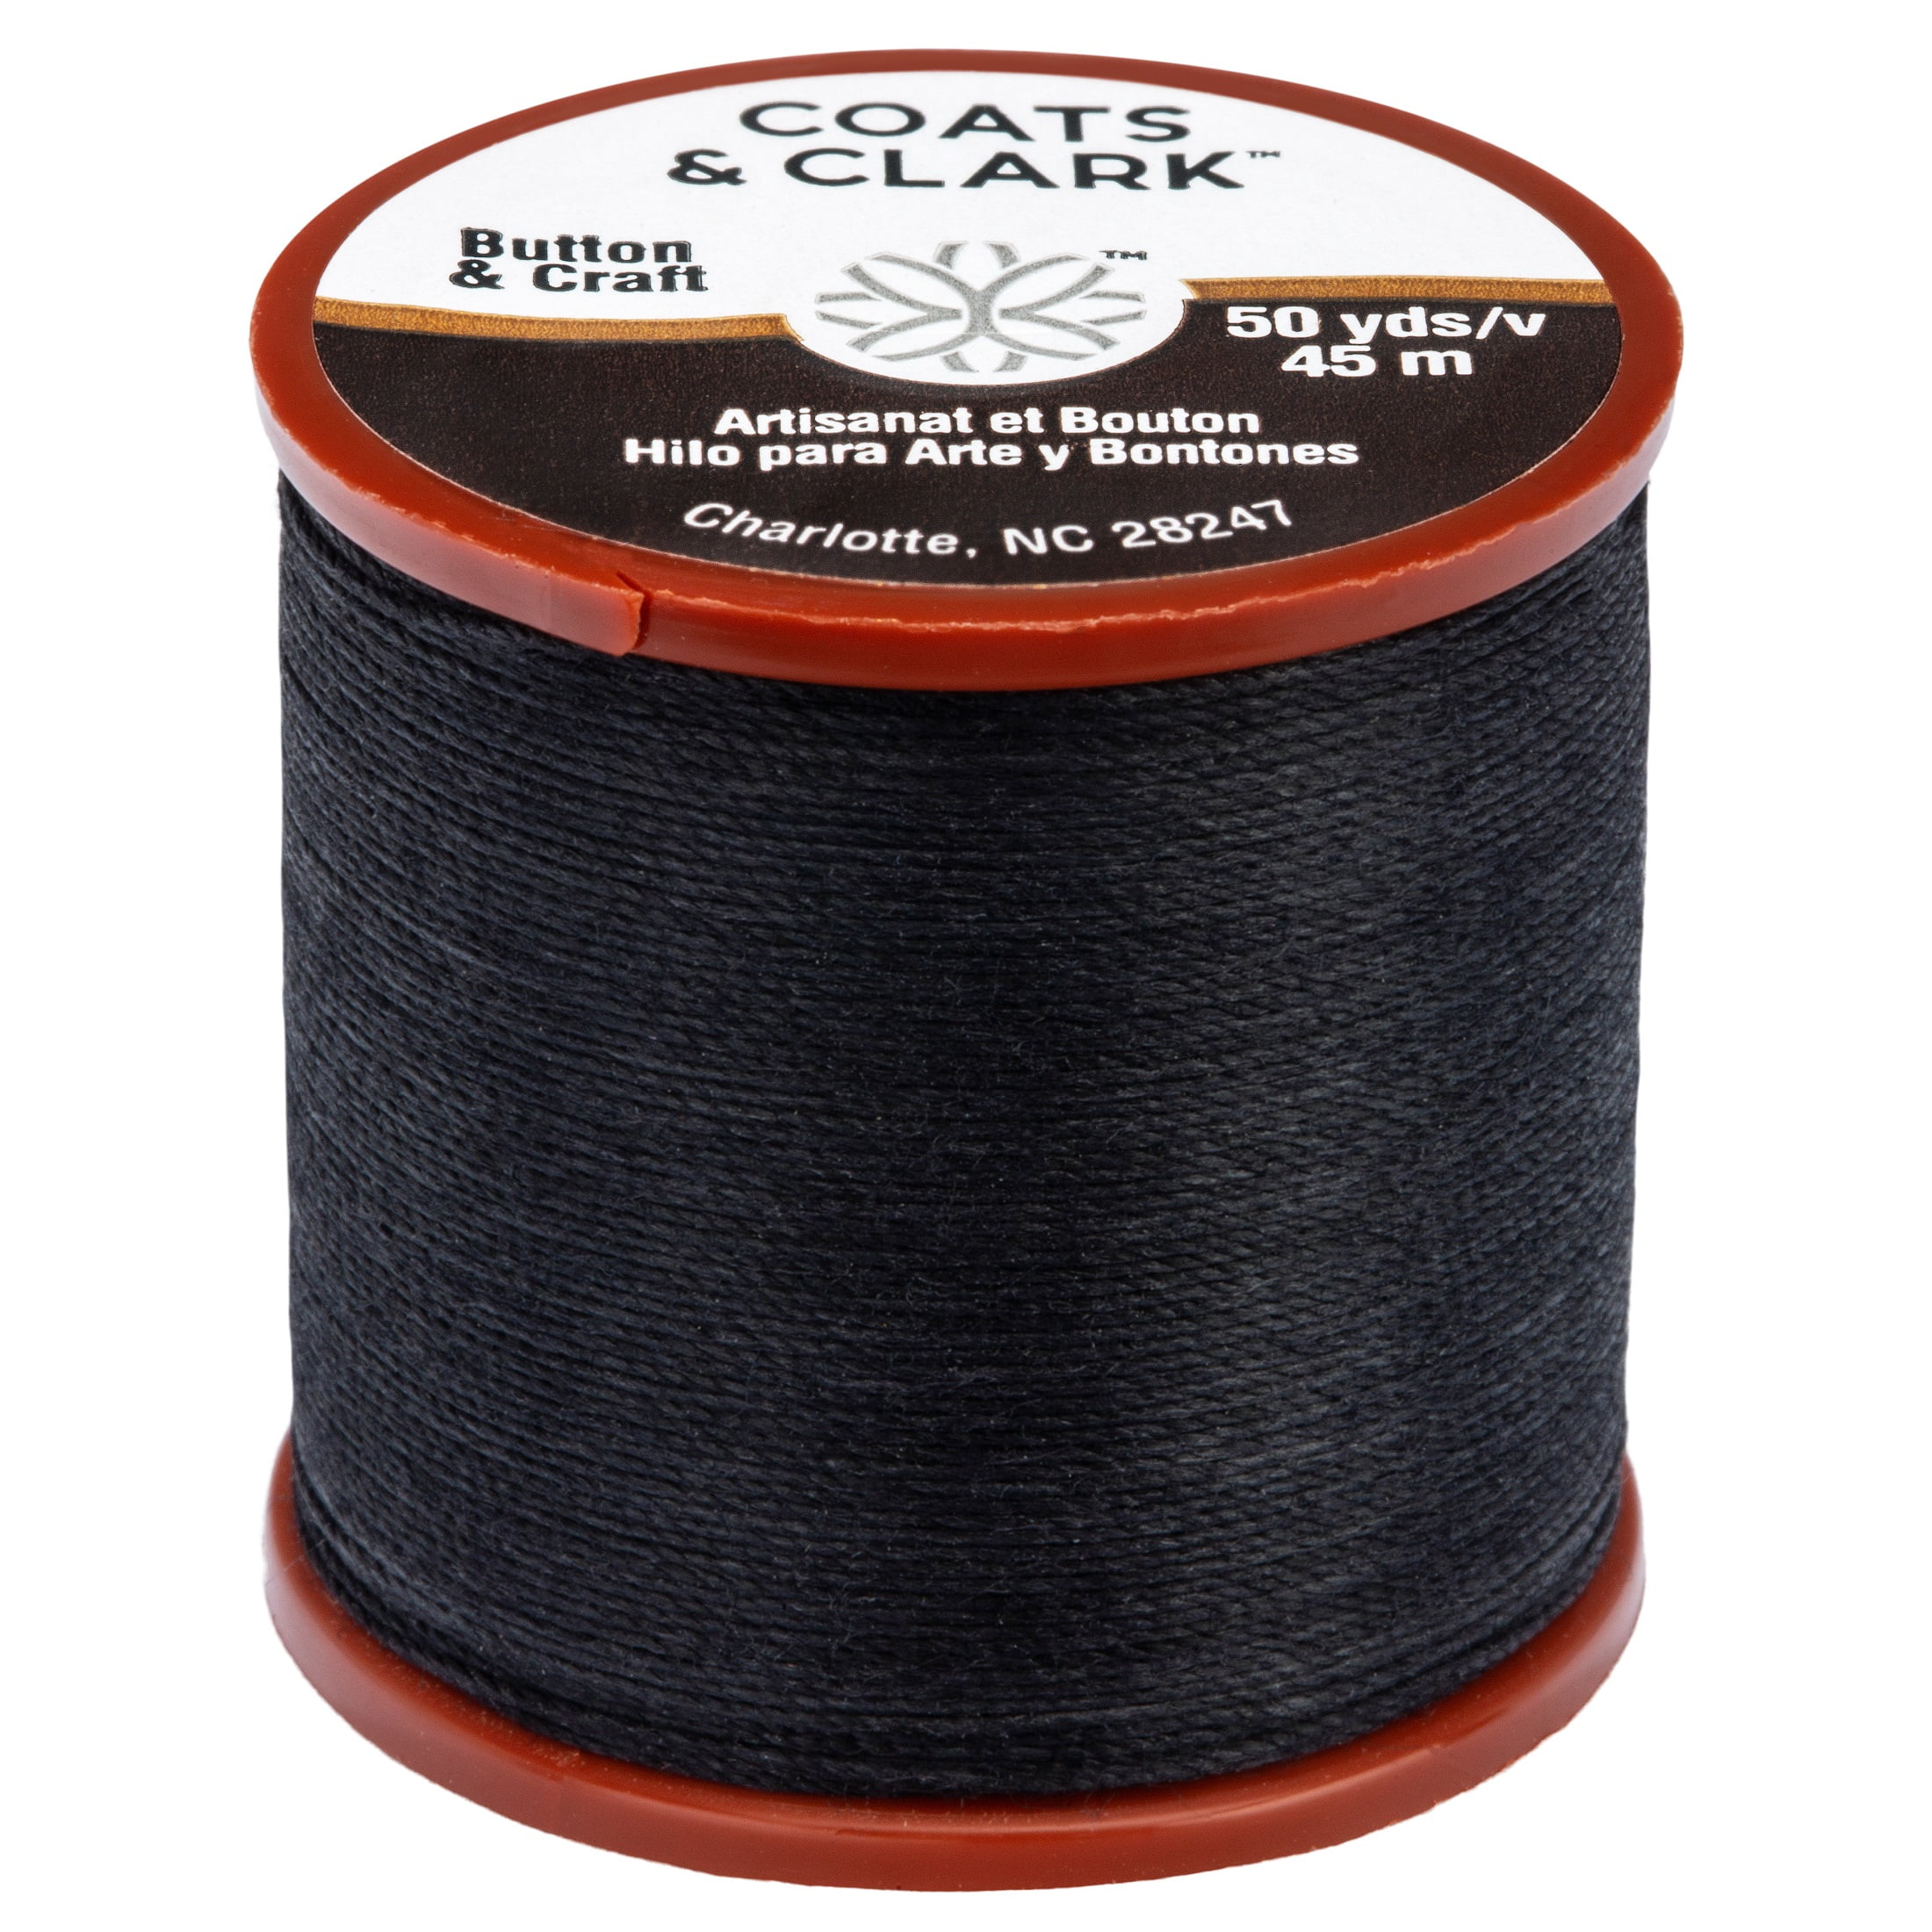 Antique Coats & Clark Button/Carpet Thread versus New Singer Button/Carpet  Thread